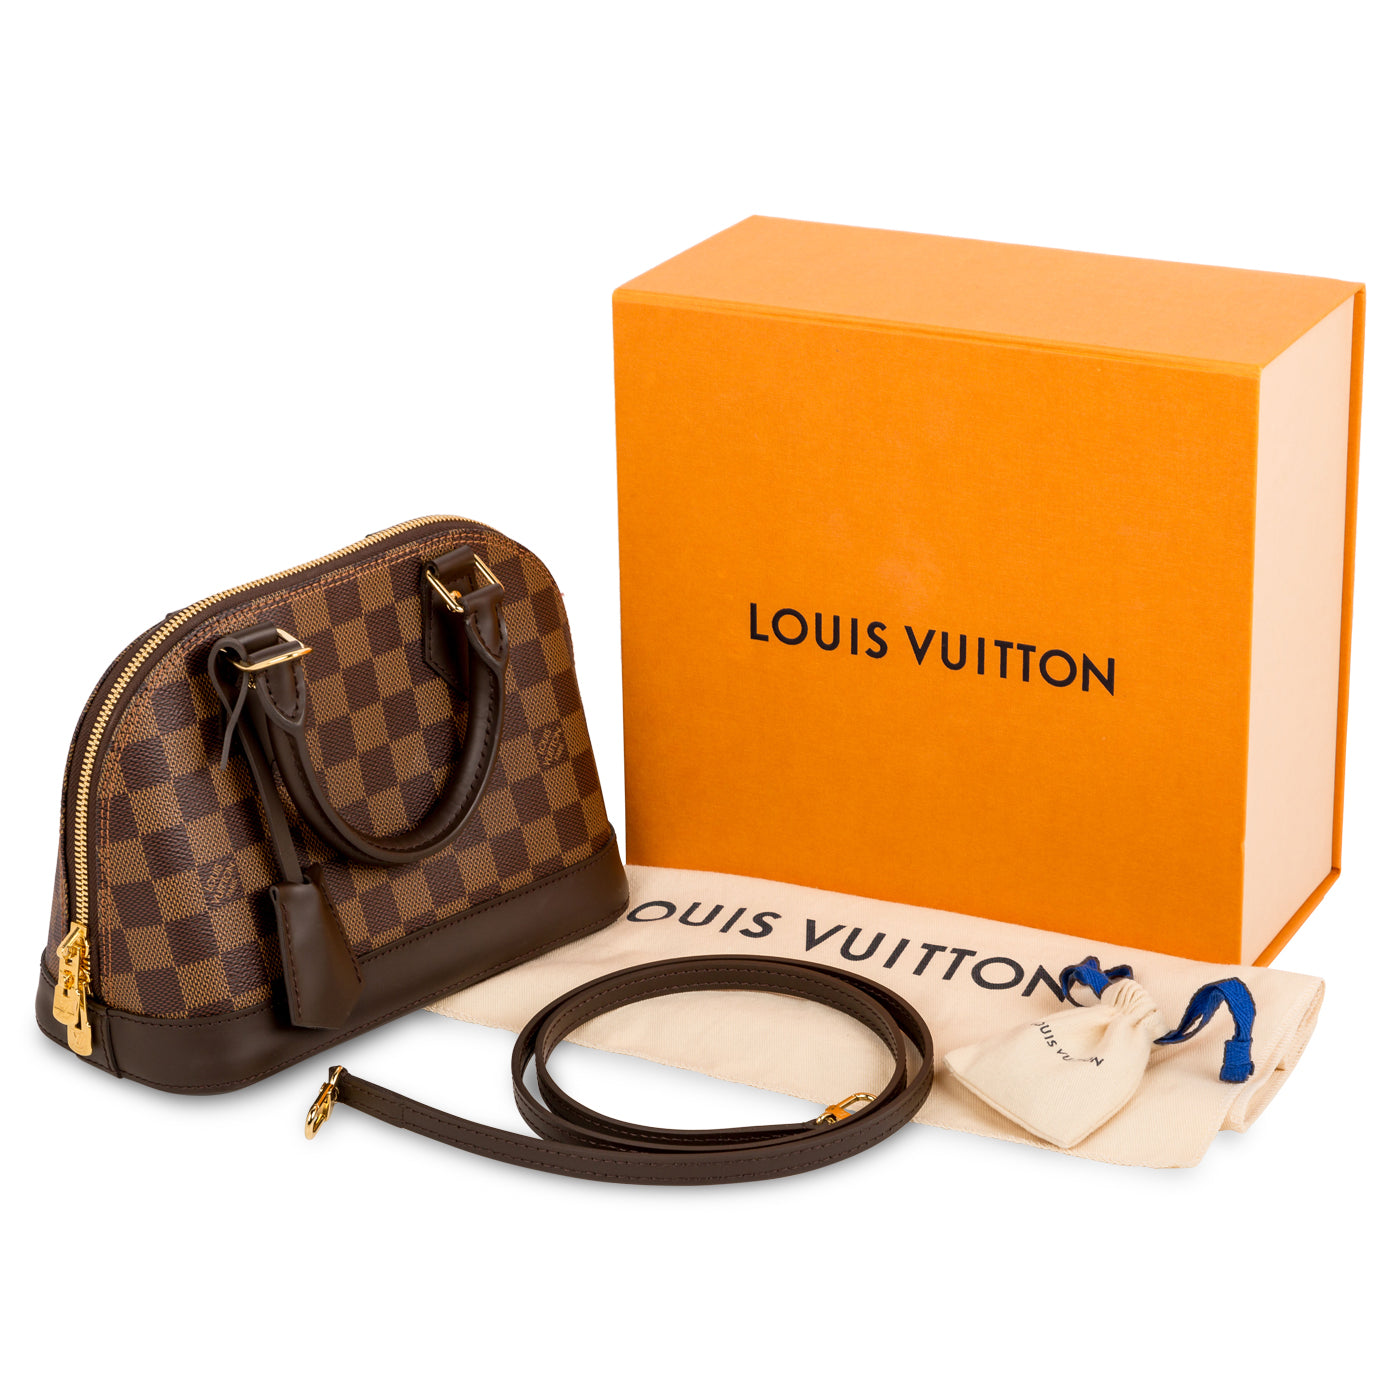 ✨SOLD ✨ Excellent condition Louis Vuitton Alma BB  Louis vuitton alma bb, Louis  vuitton alma, Louis vuitton